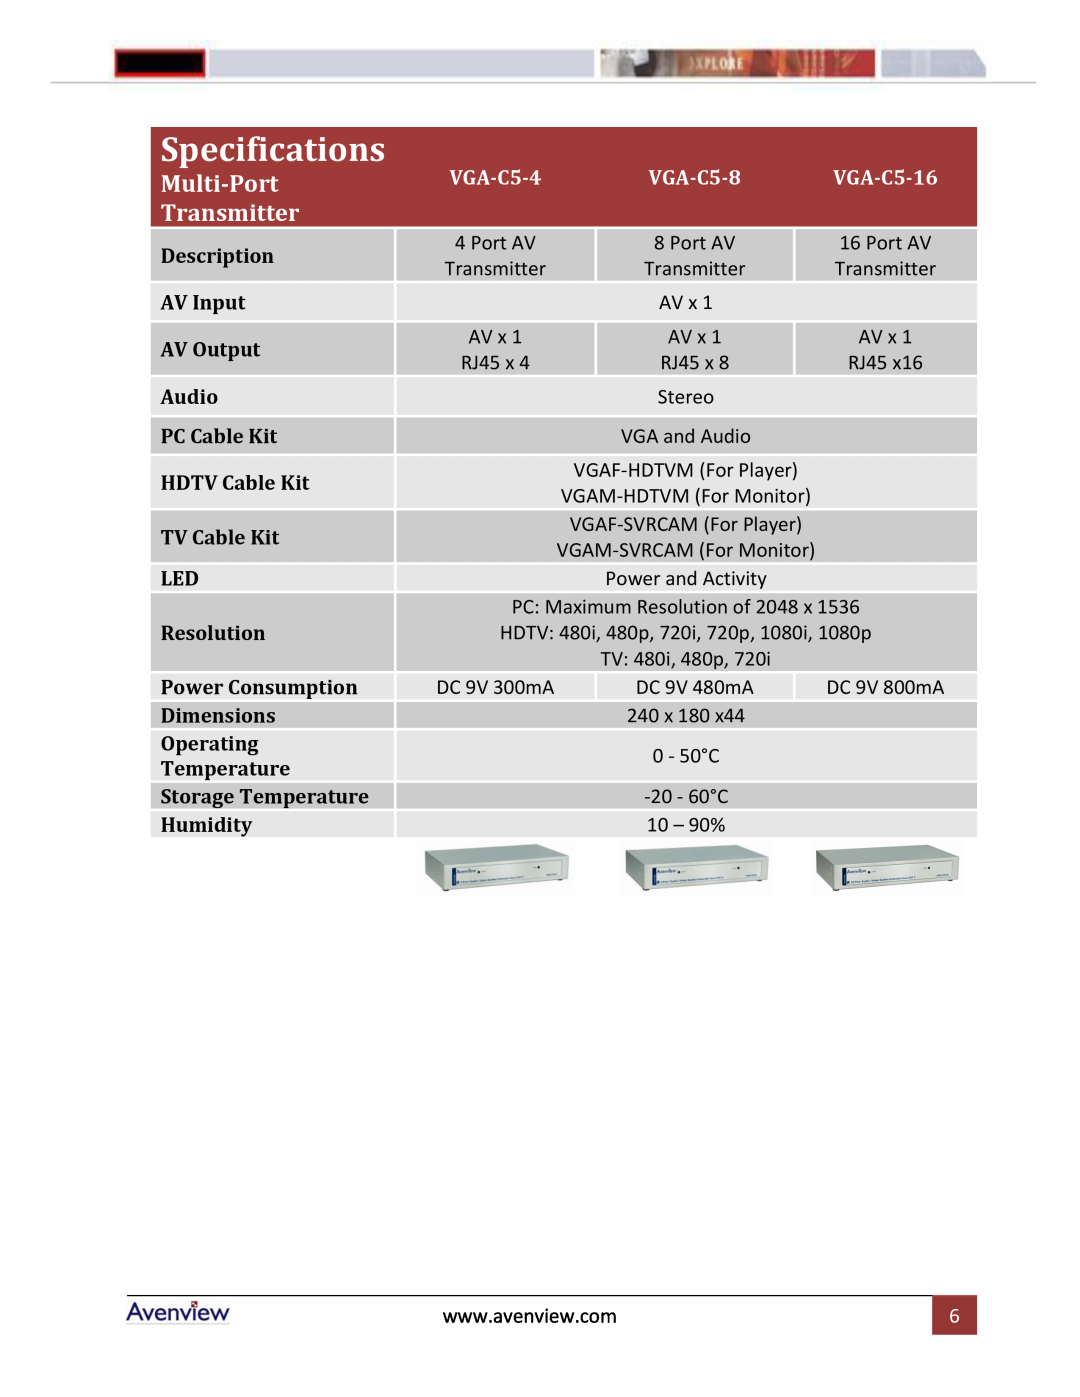 Avenview VGA-C5-8-SR, VGA-C5-R, VGA-C5-4-SR manual Specifications, Multi-Port, Transmitter, VGA-C5-16 